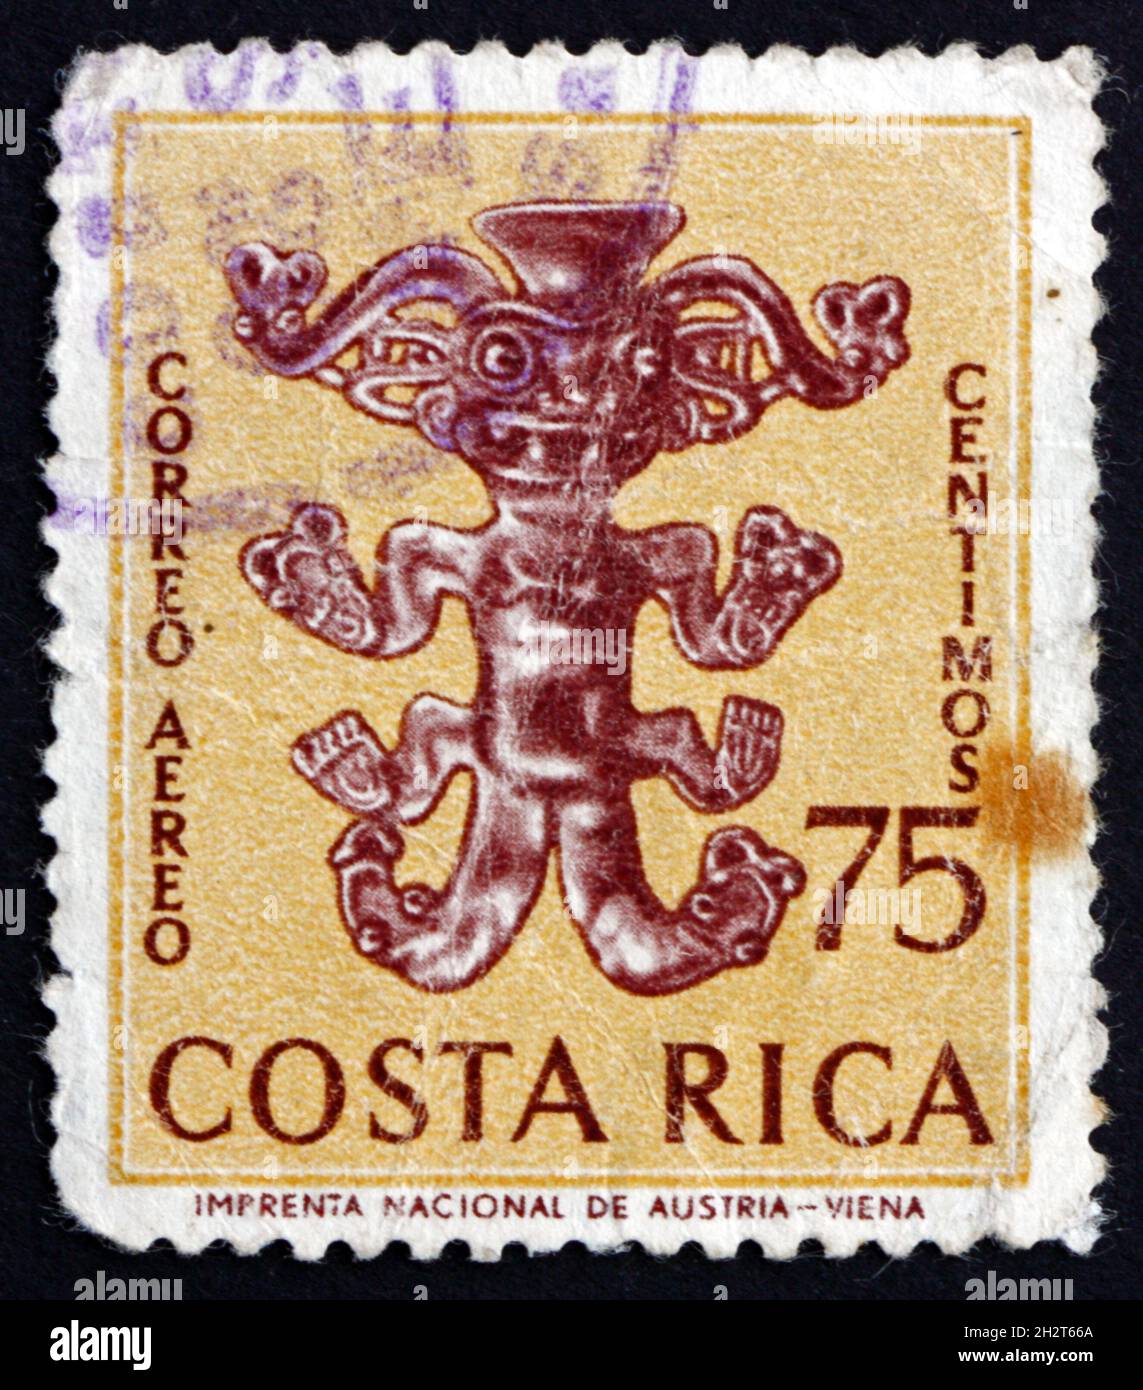 COSTA RICA - VERS 1963: Un timbre imprimé au Costa Rica montre six limbed figure, figure ancestrale, vers 1963 Banque D'Images